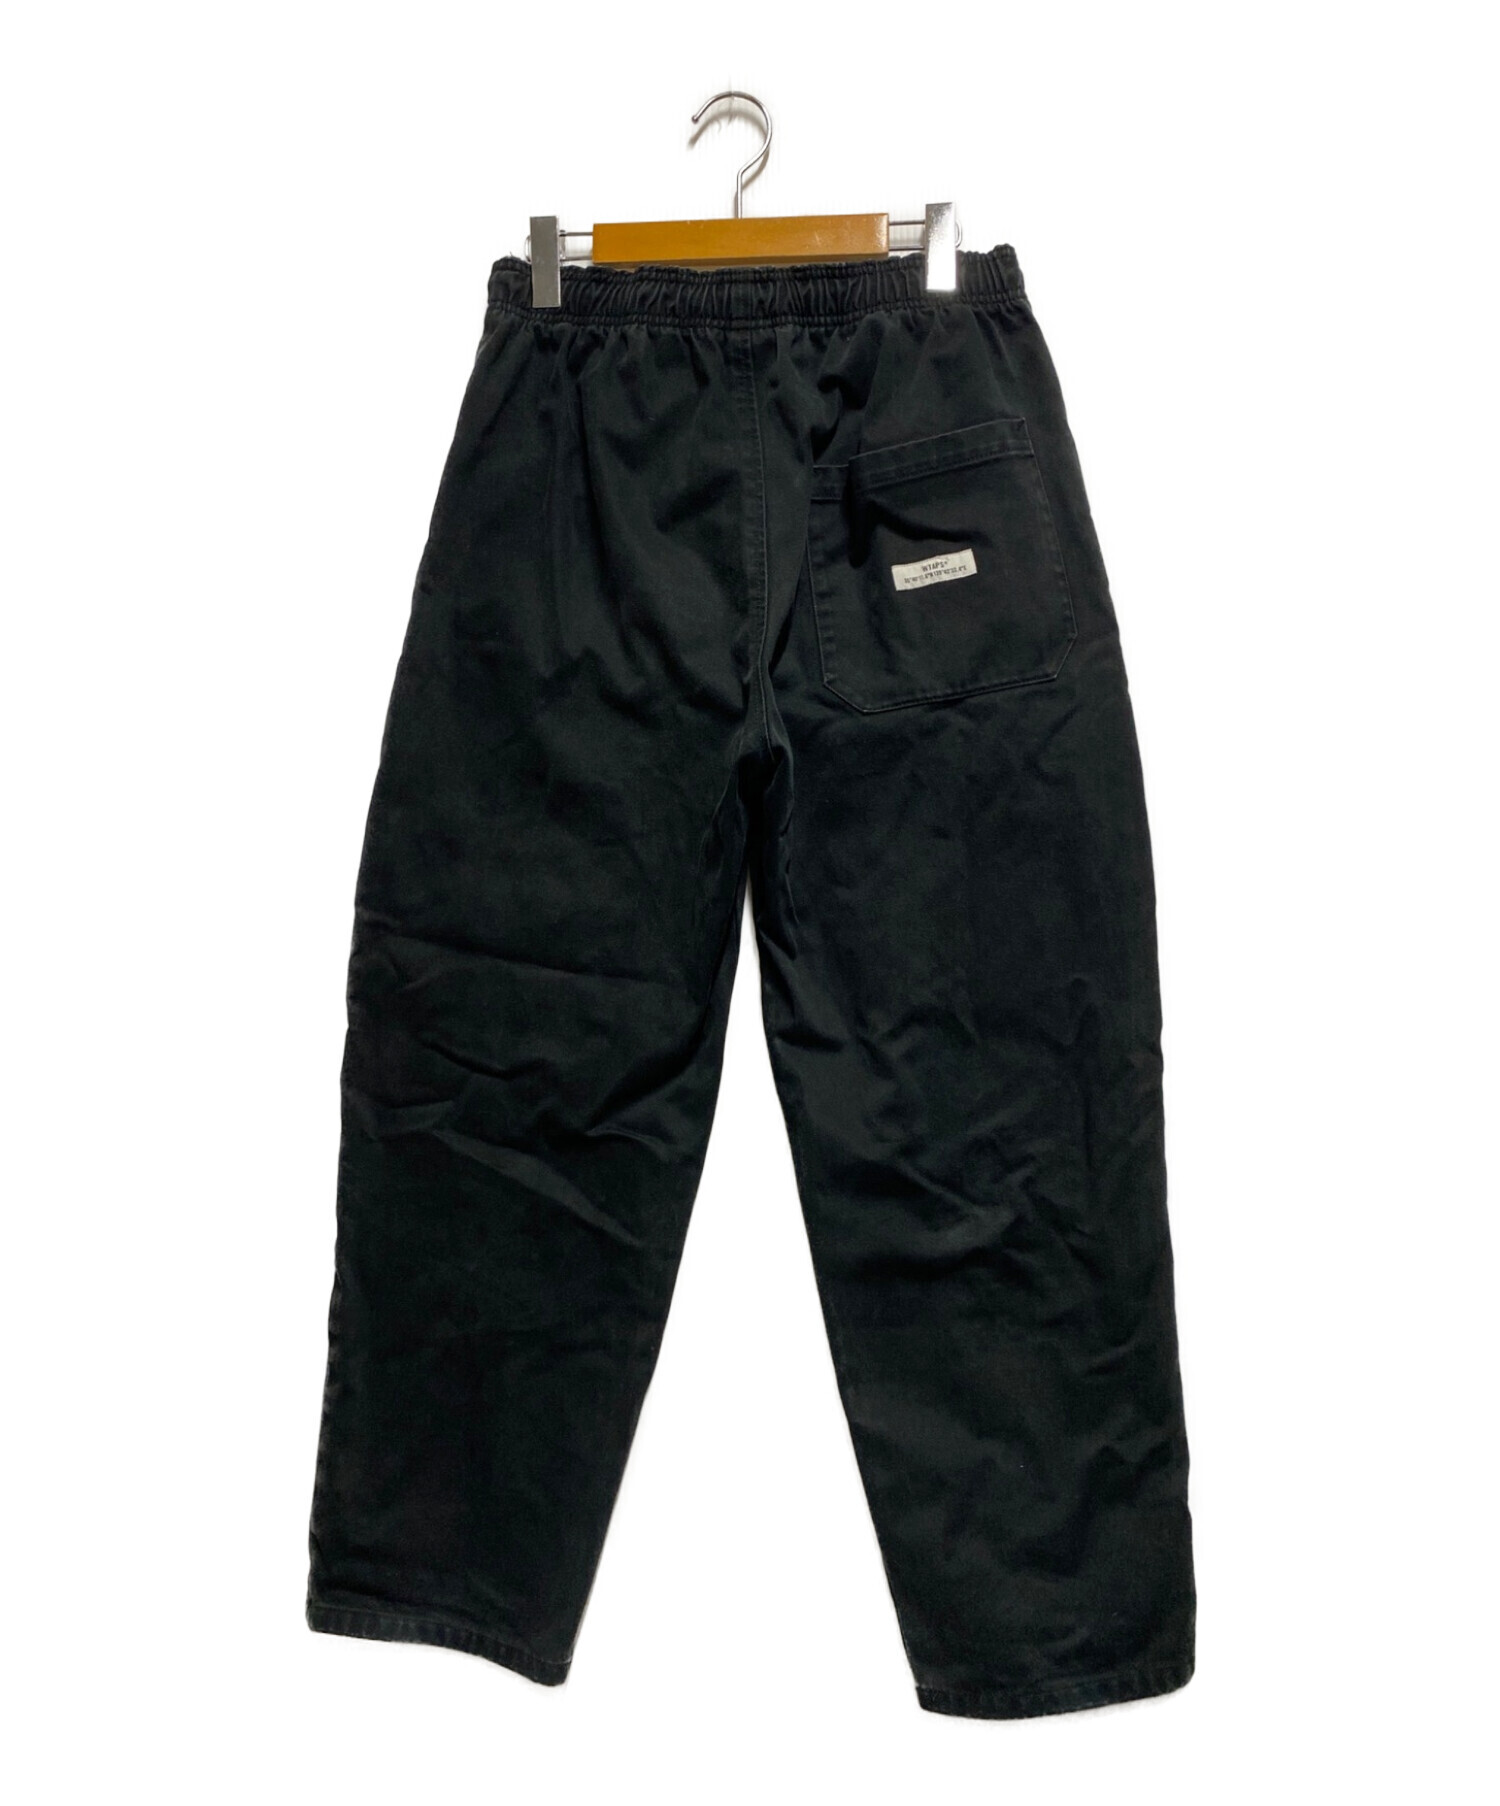 Wtaps pants black size 03